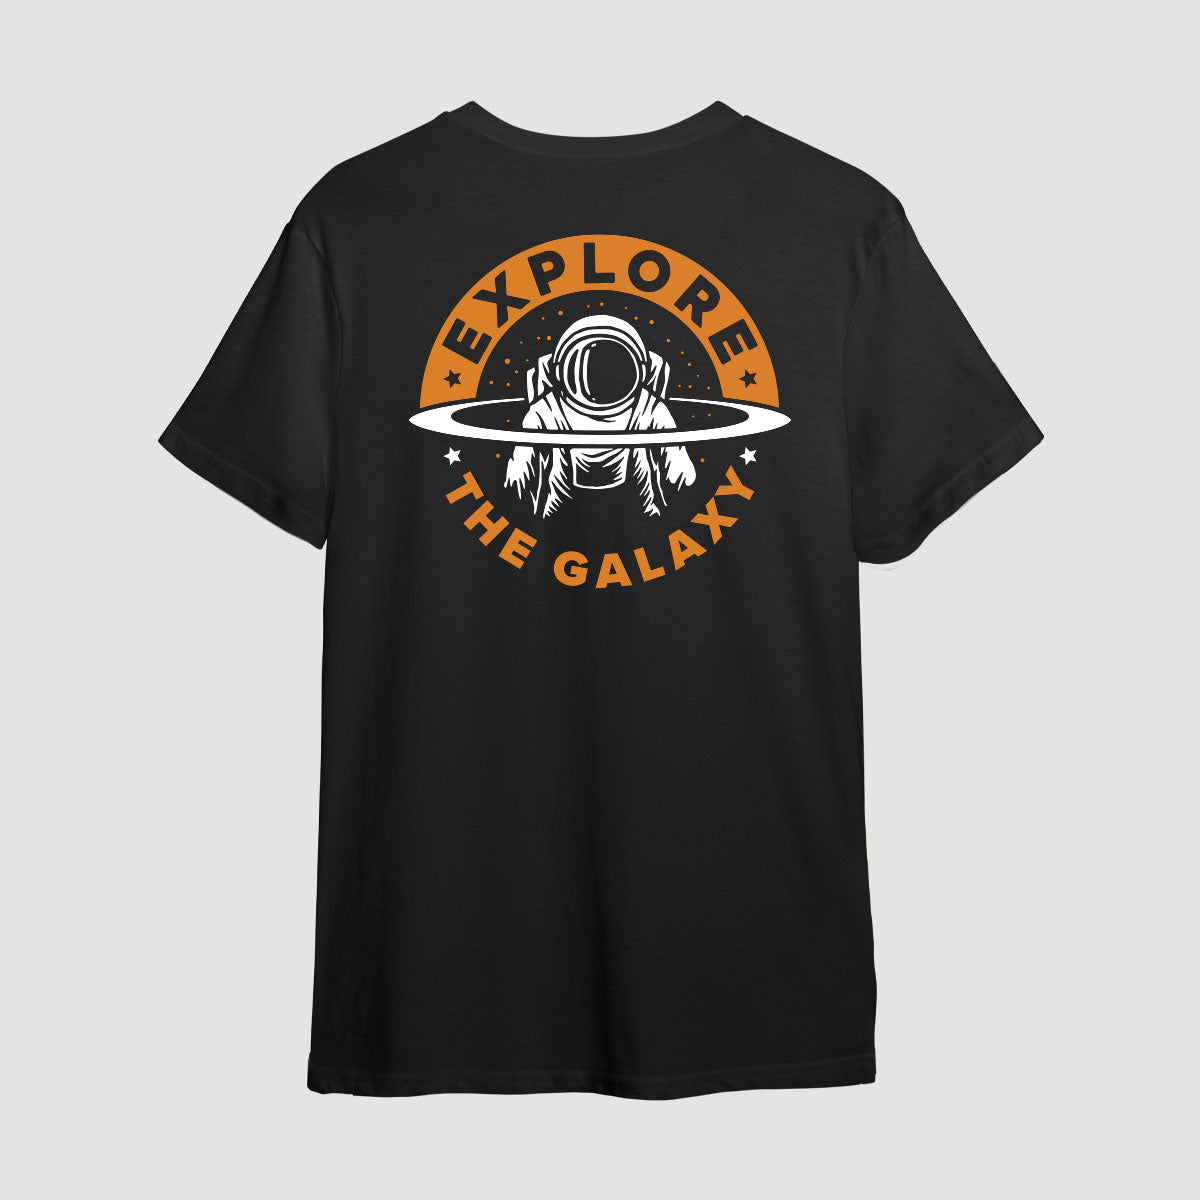 Explore The Galaxy T-Shirt